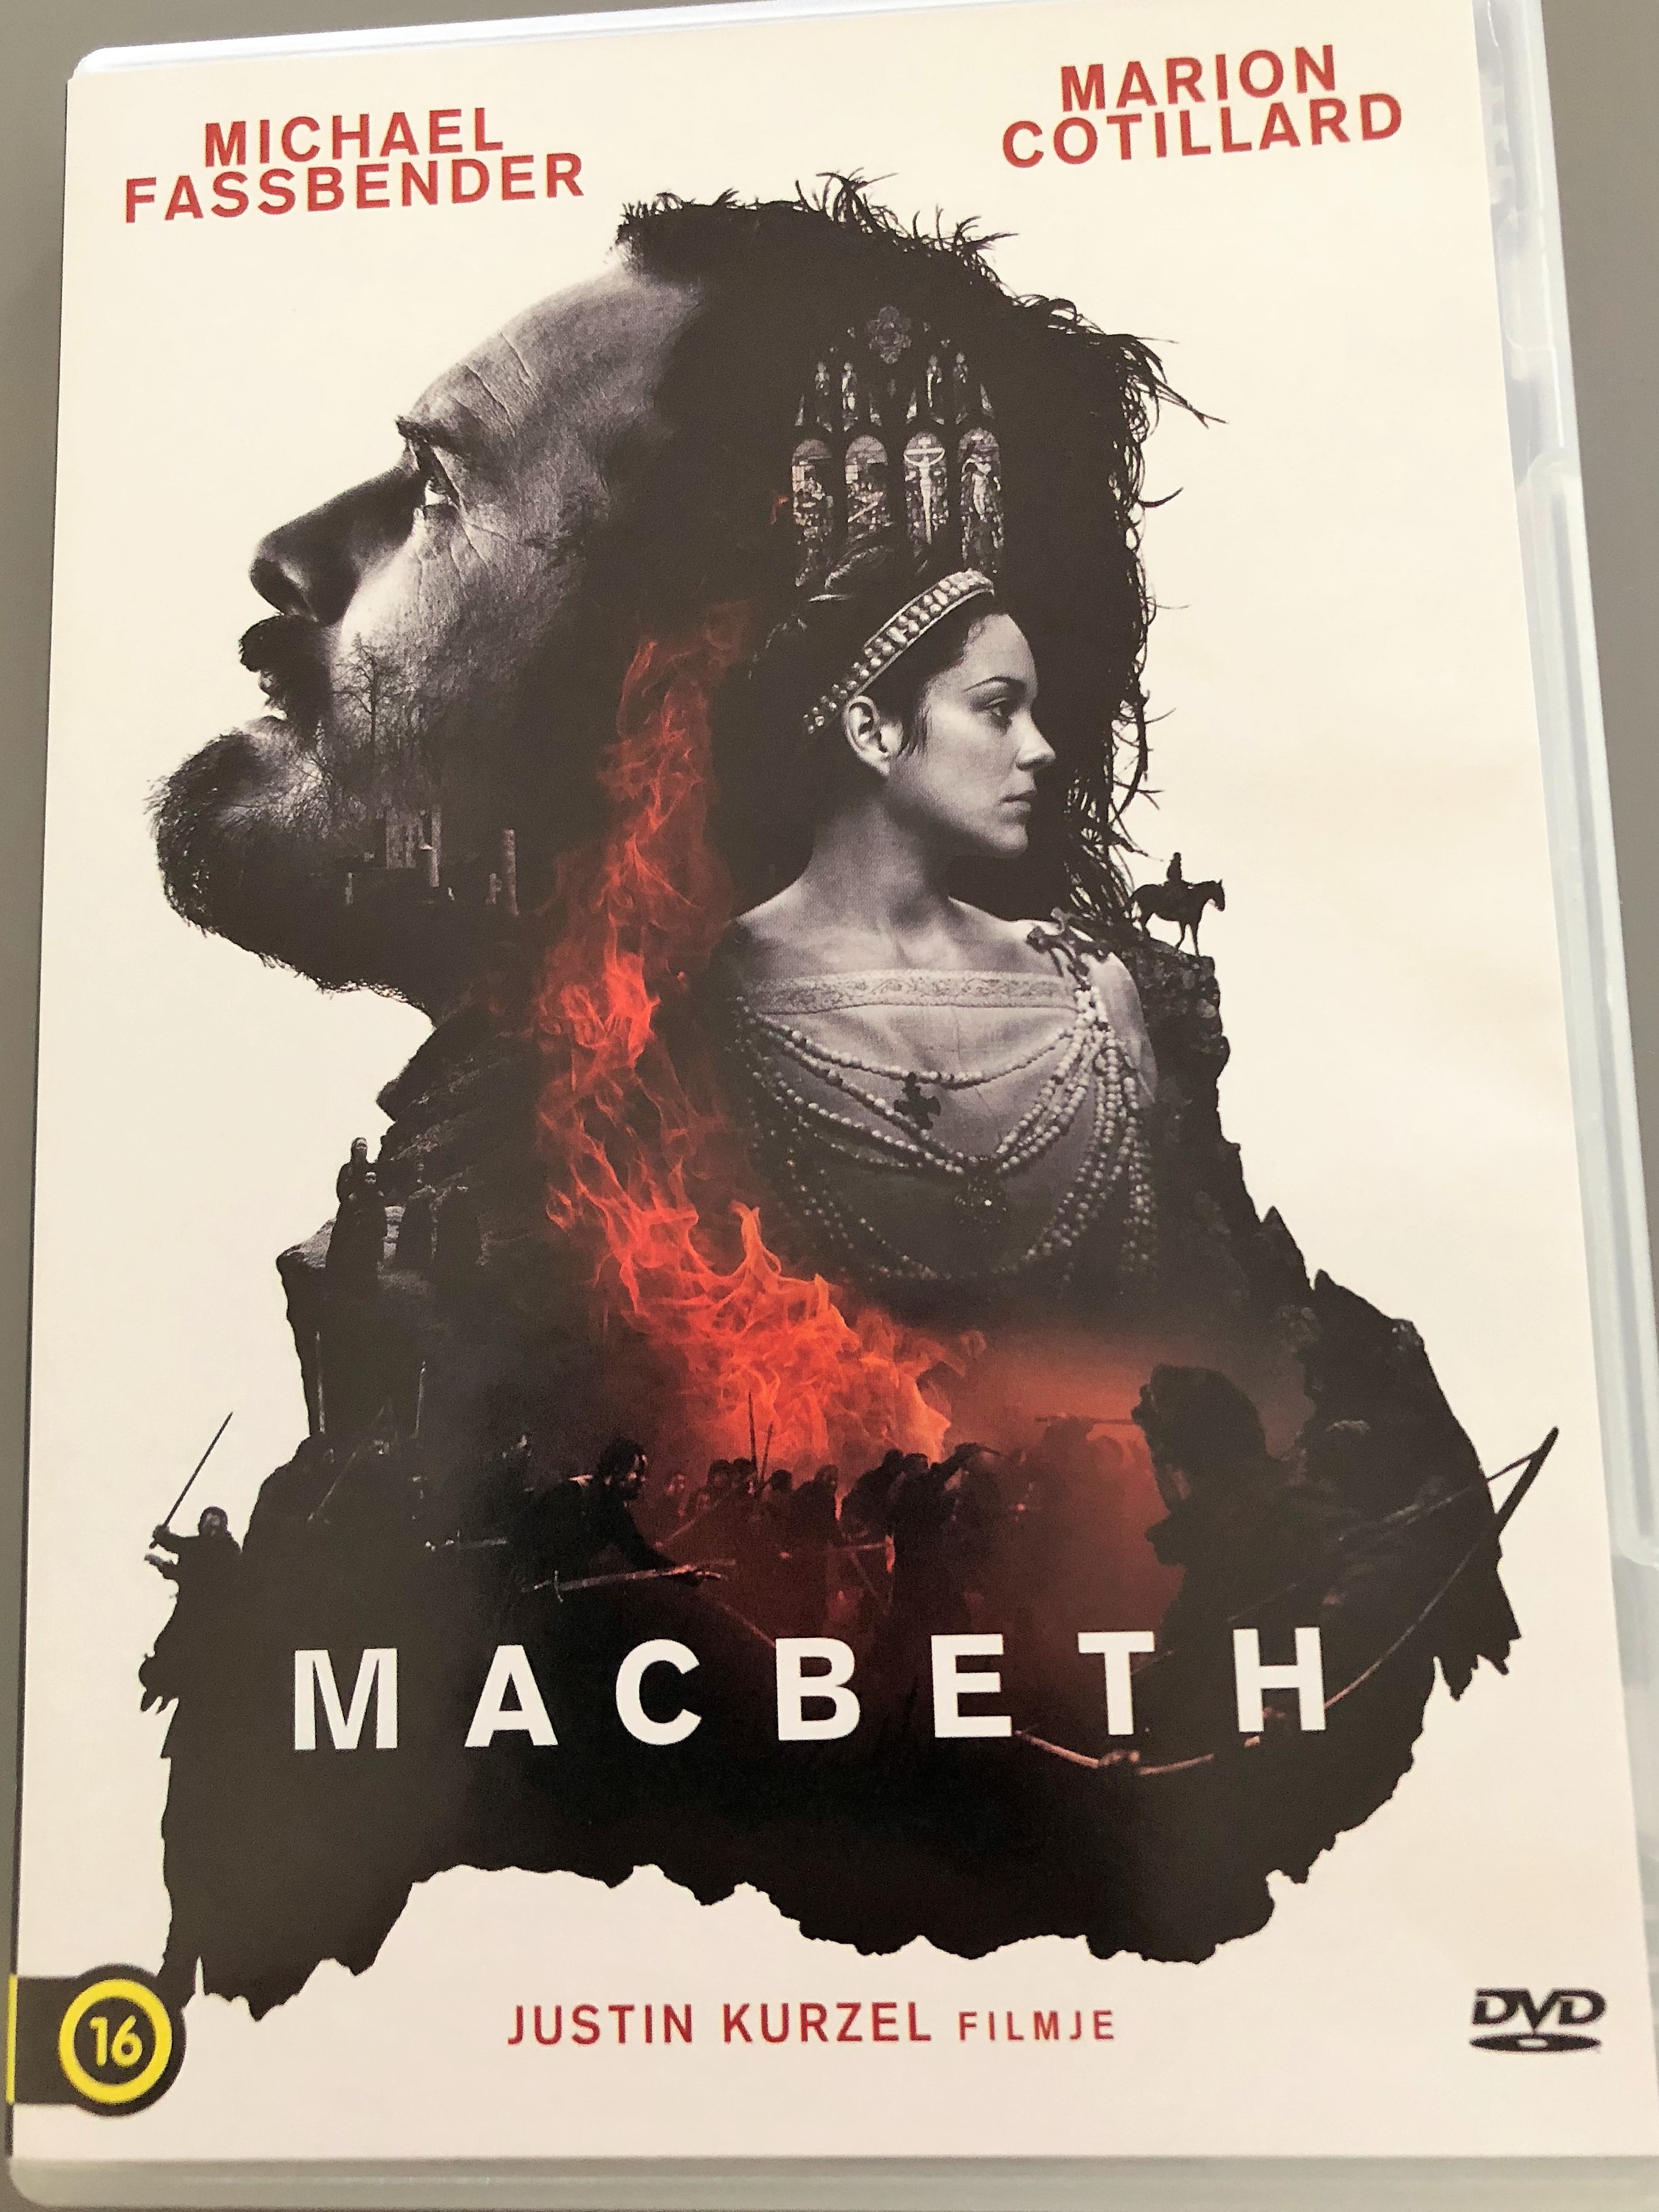 -macbeth-dvd-2015-directed-by-justin-kurzel-starring-michael-fassbender-marion-cotillard-based-on-drama-by-w.-shakespeare-1-.jpg